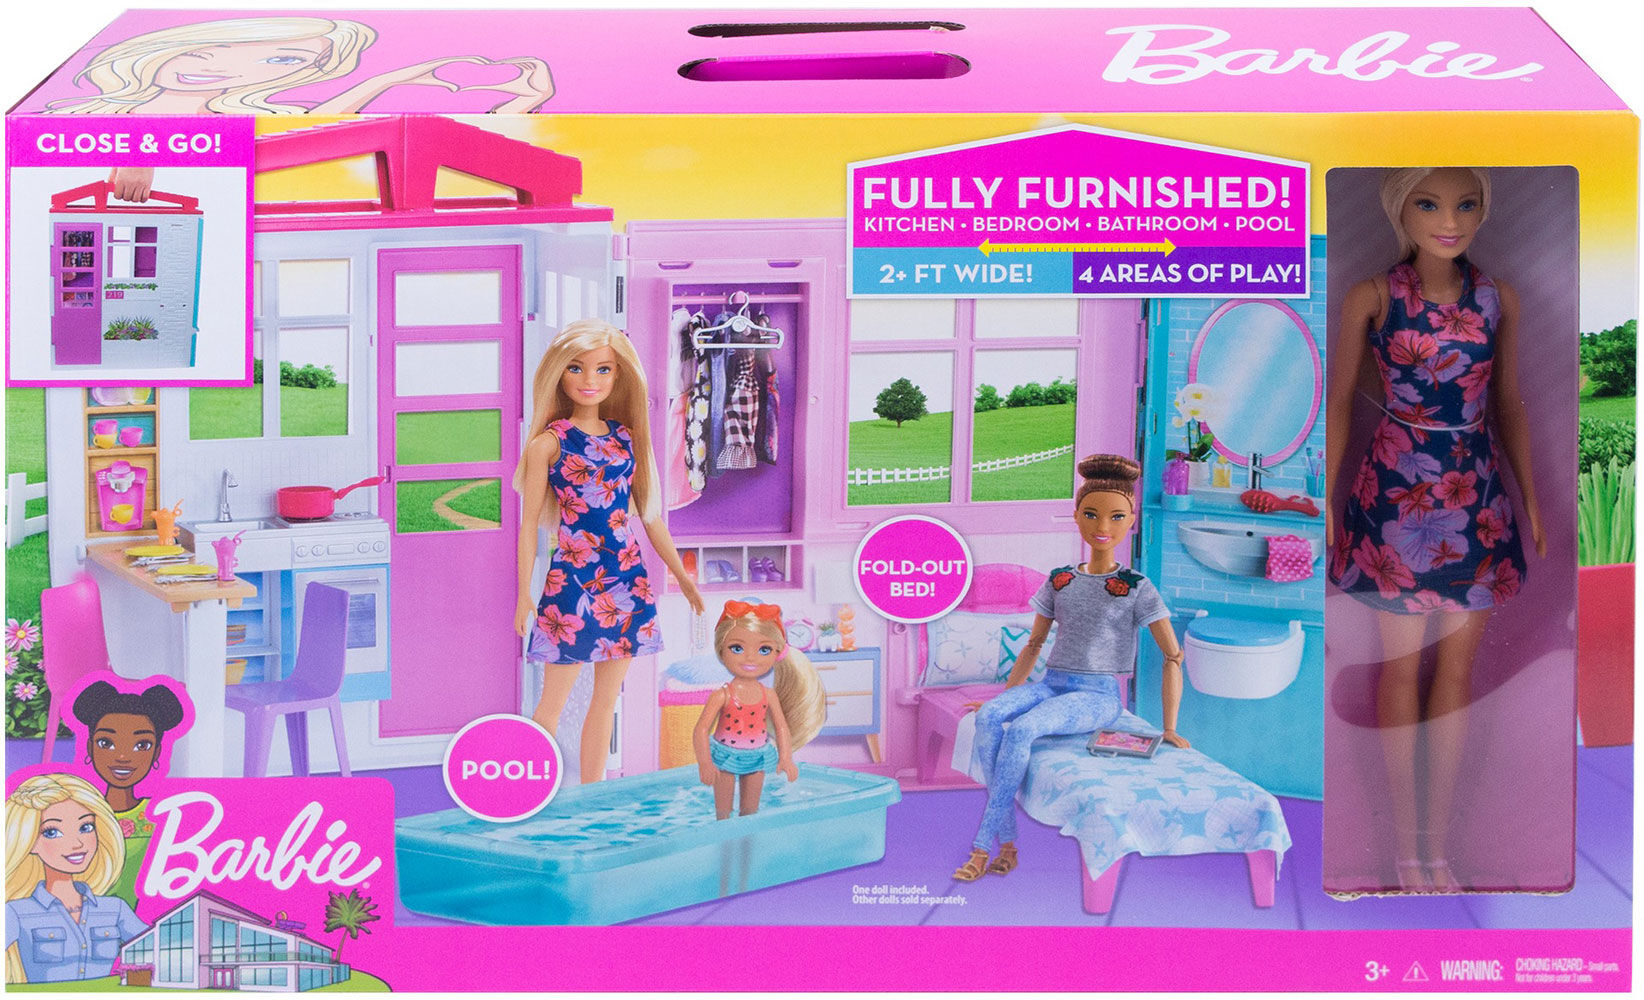 portable barbie house